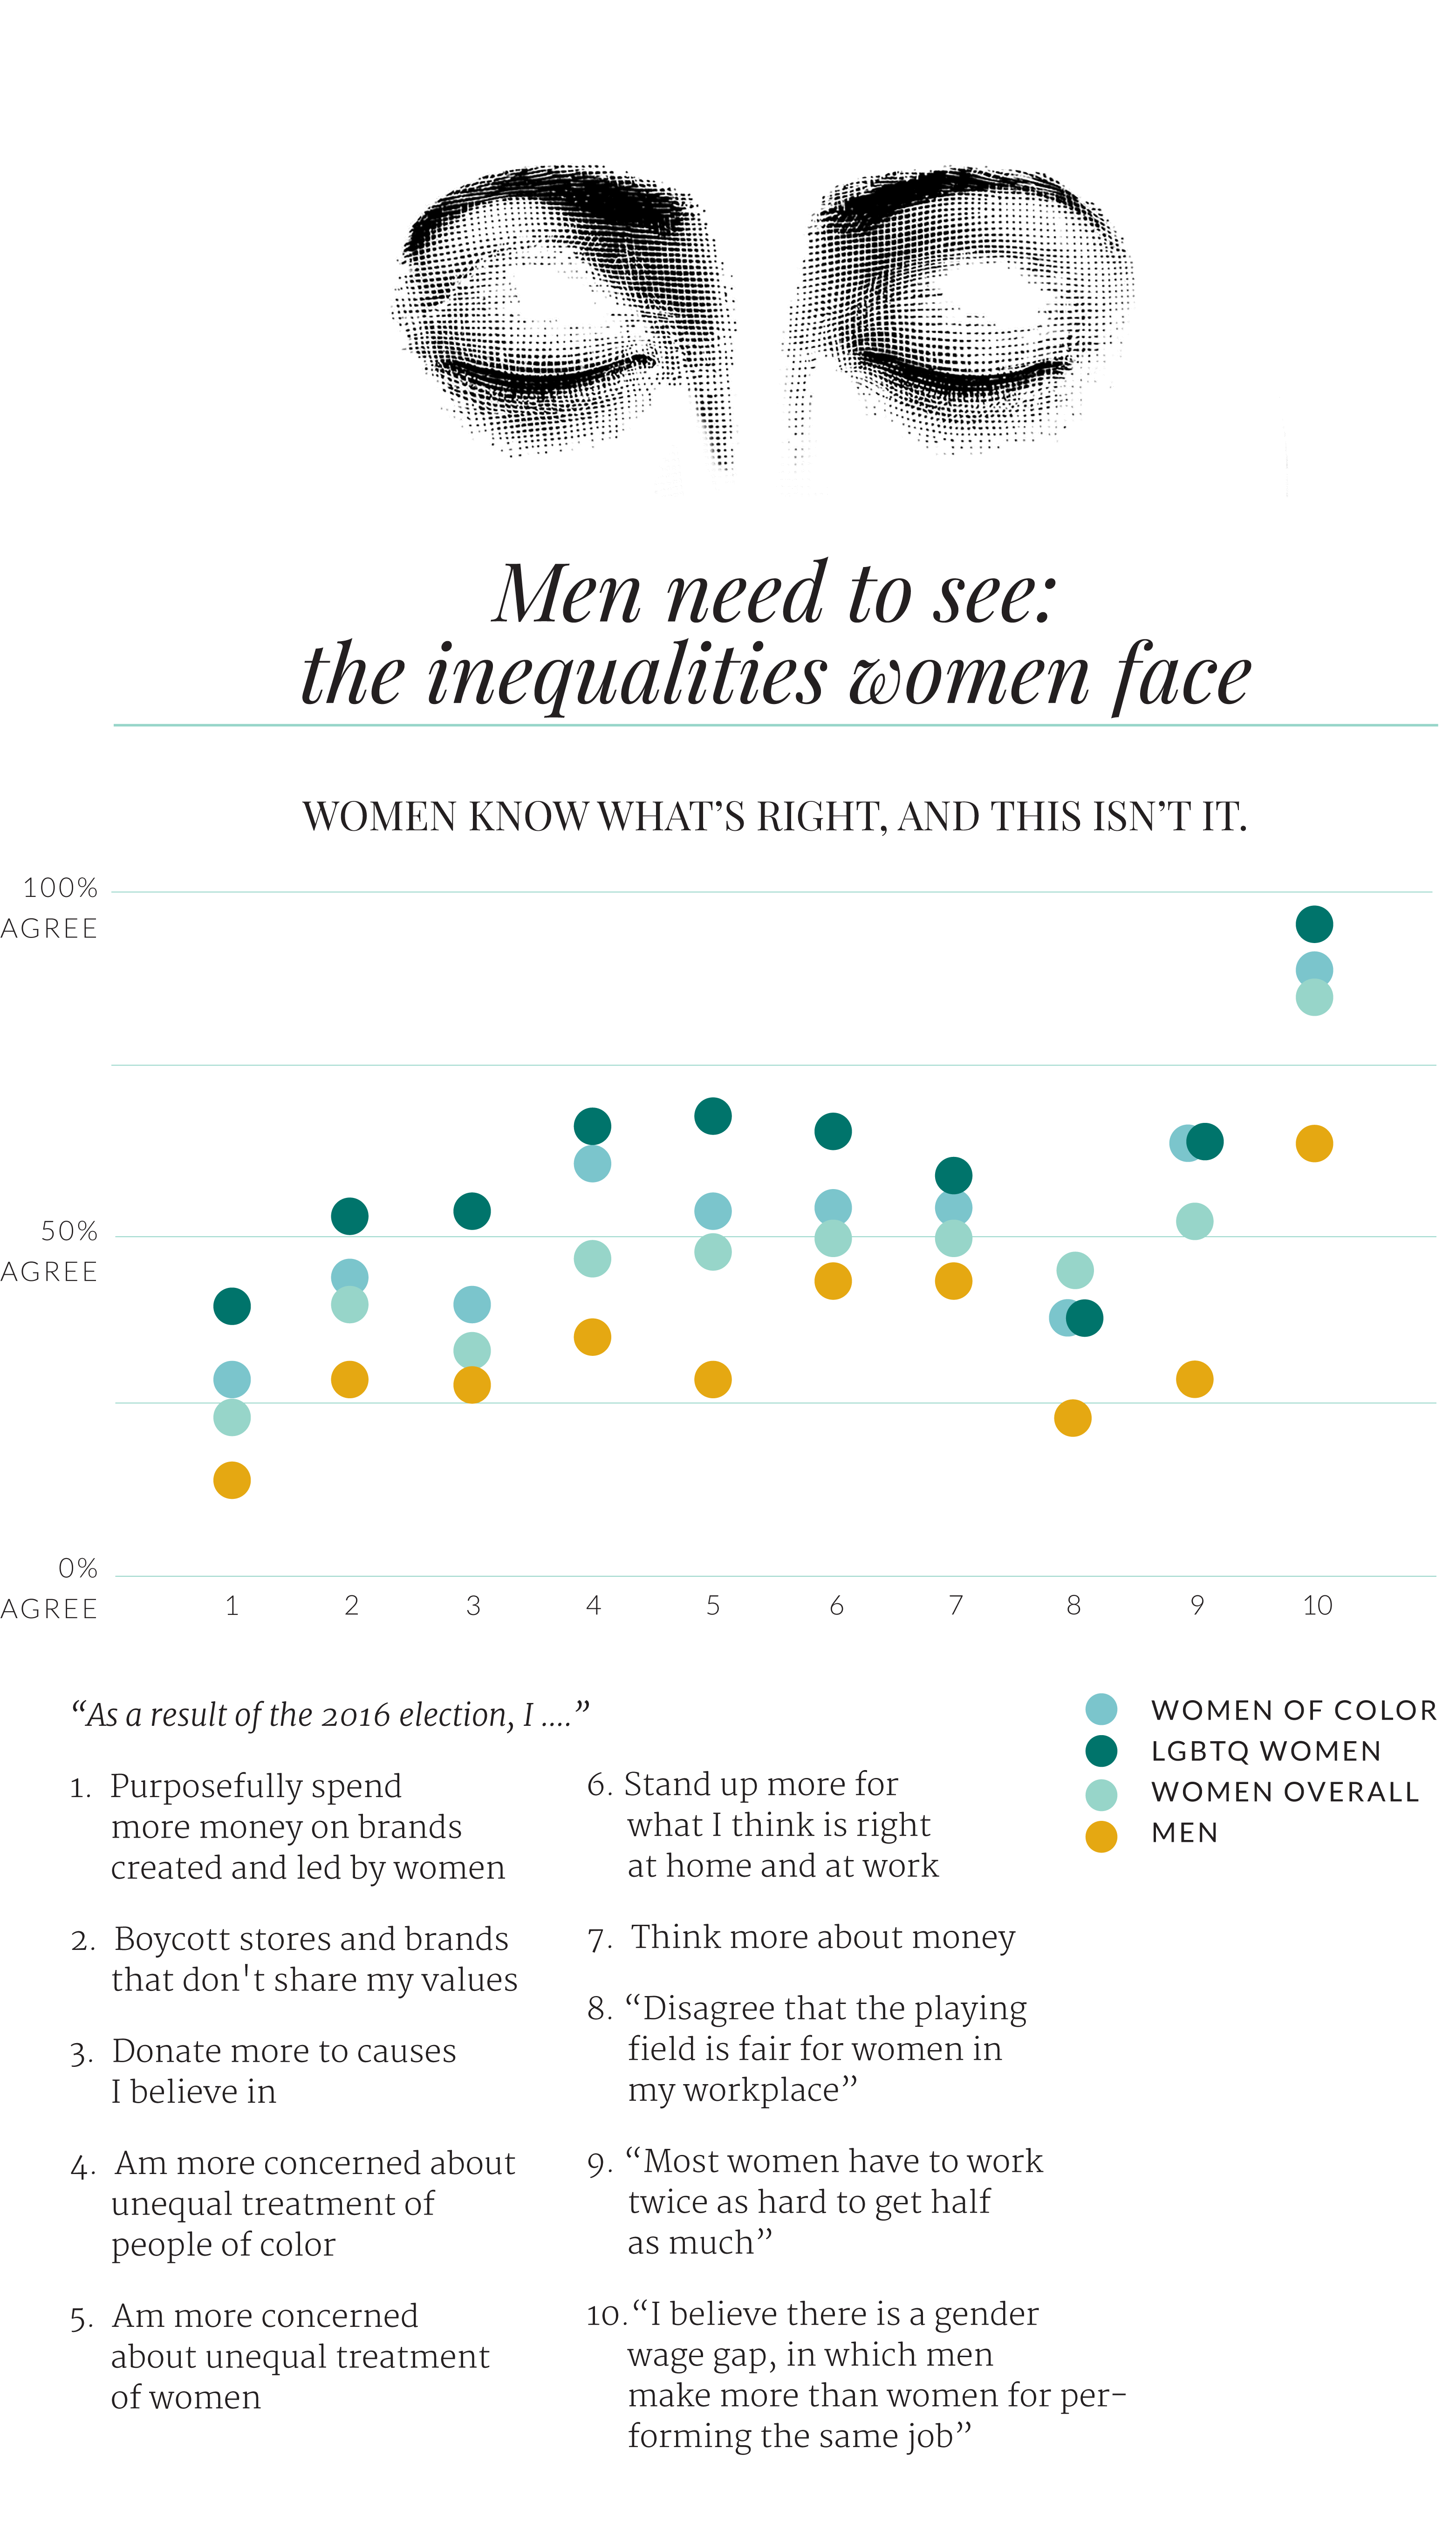 Men Need to See Inequalities